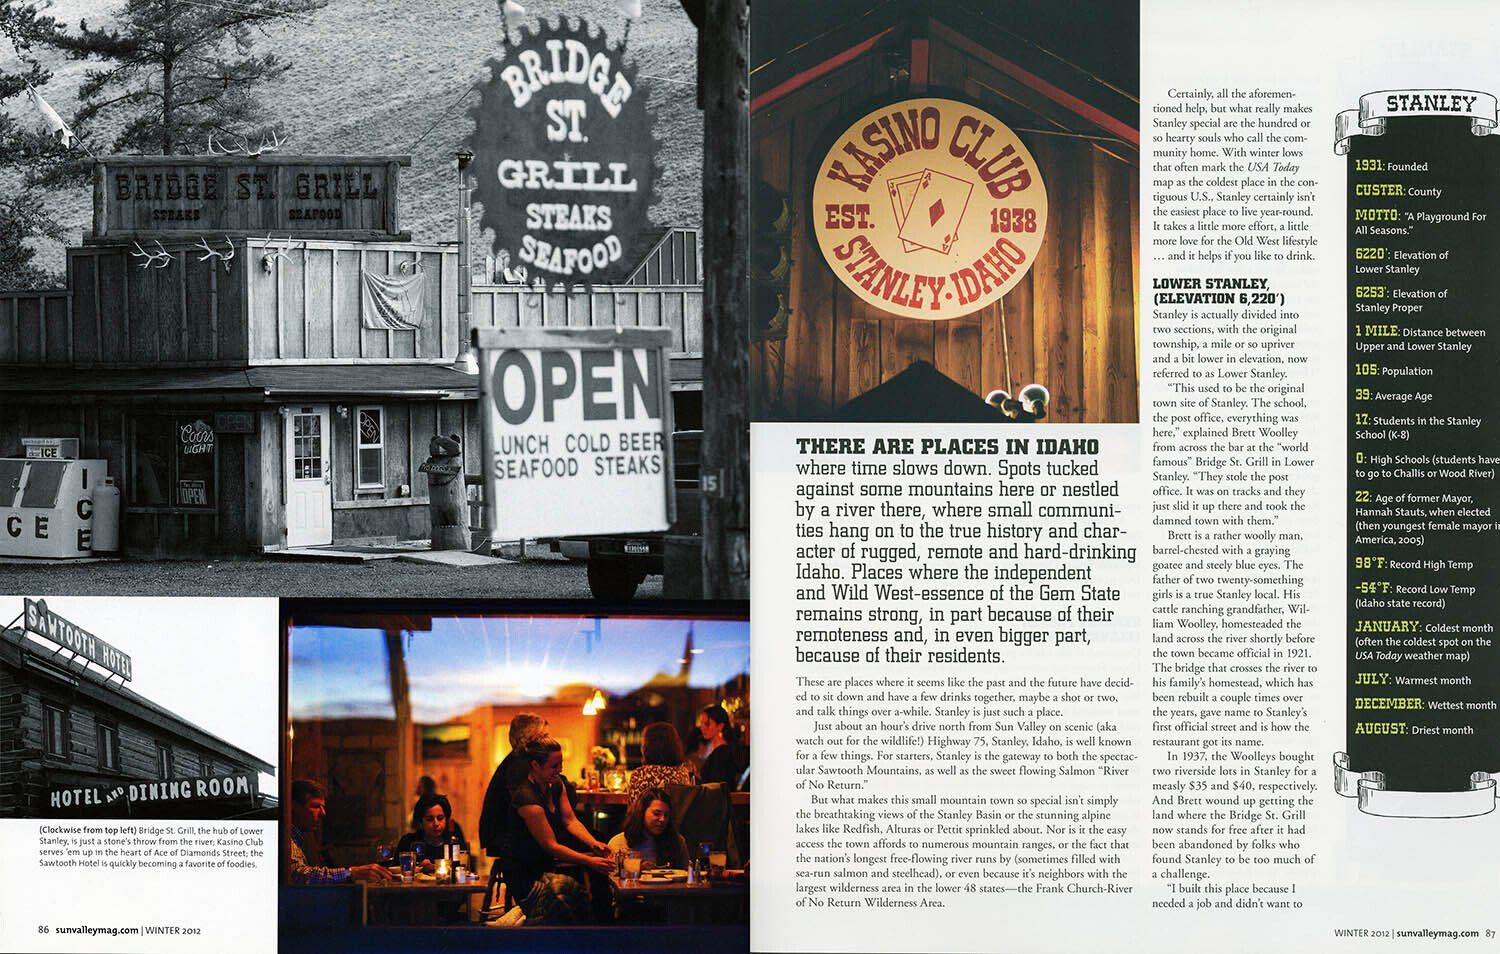 Editorial photo essay, Sun Valley Magazine, Stanley, Idaho, winter, small town, rural